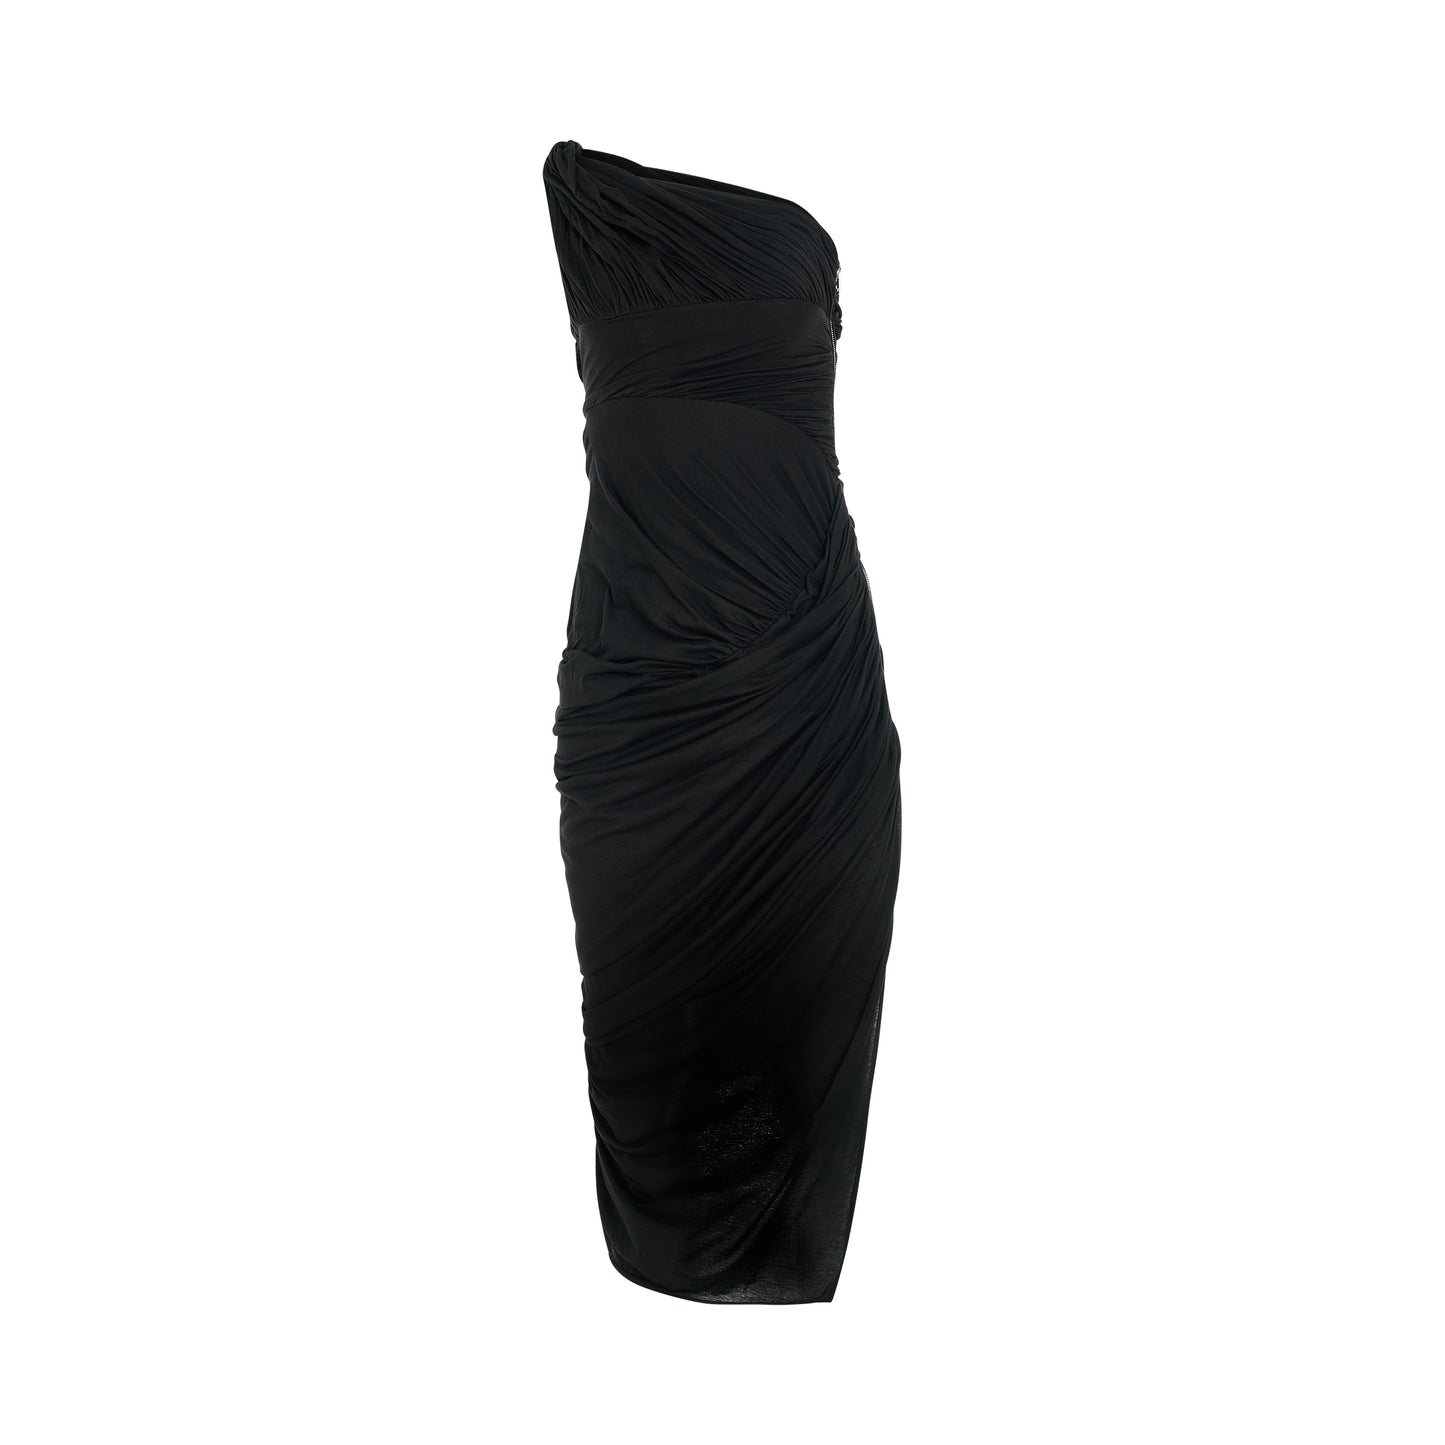 Lido Draped Dress in Black